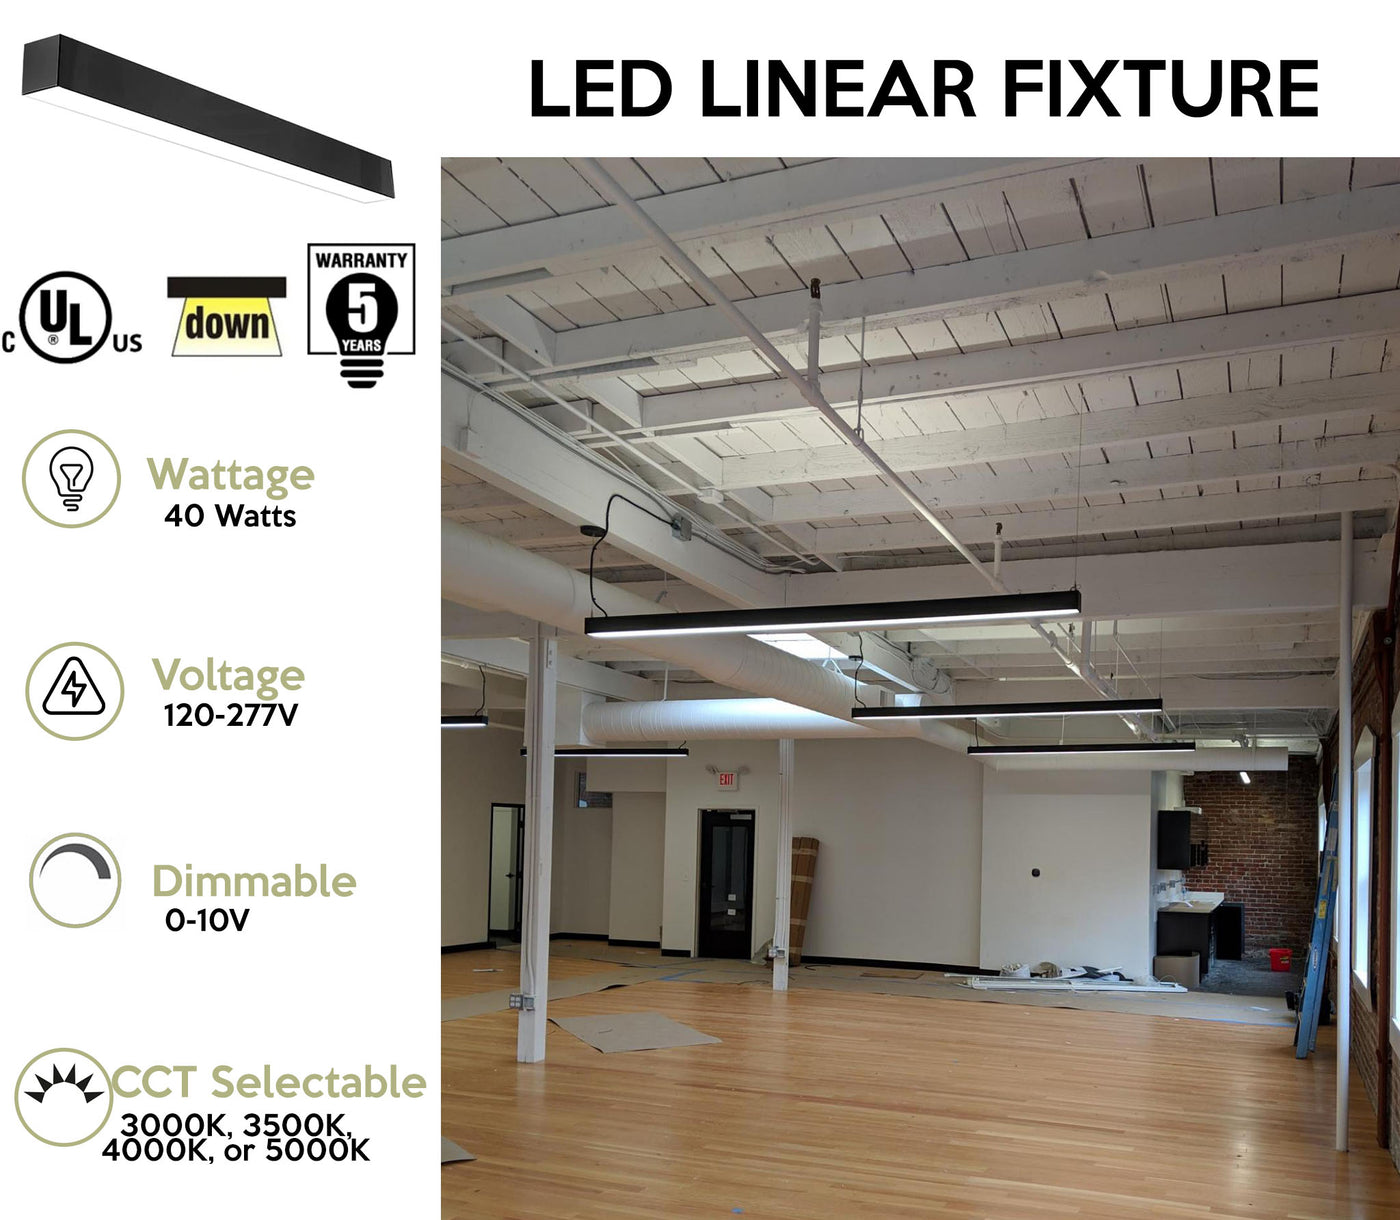 4 FT LED Linear Fixture G2, 4800 Lumen Max, 40 Watt, CCT Selectable,  120-277V, Black, White or Silver Finish